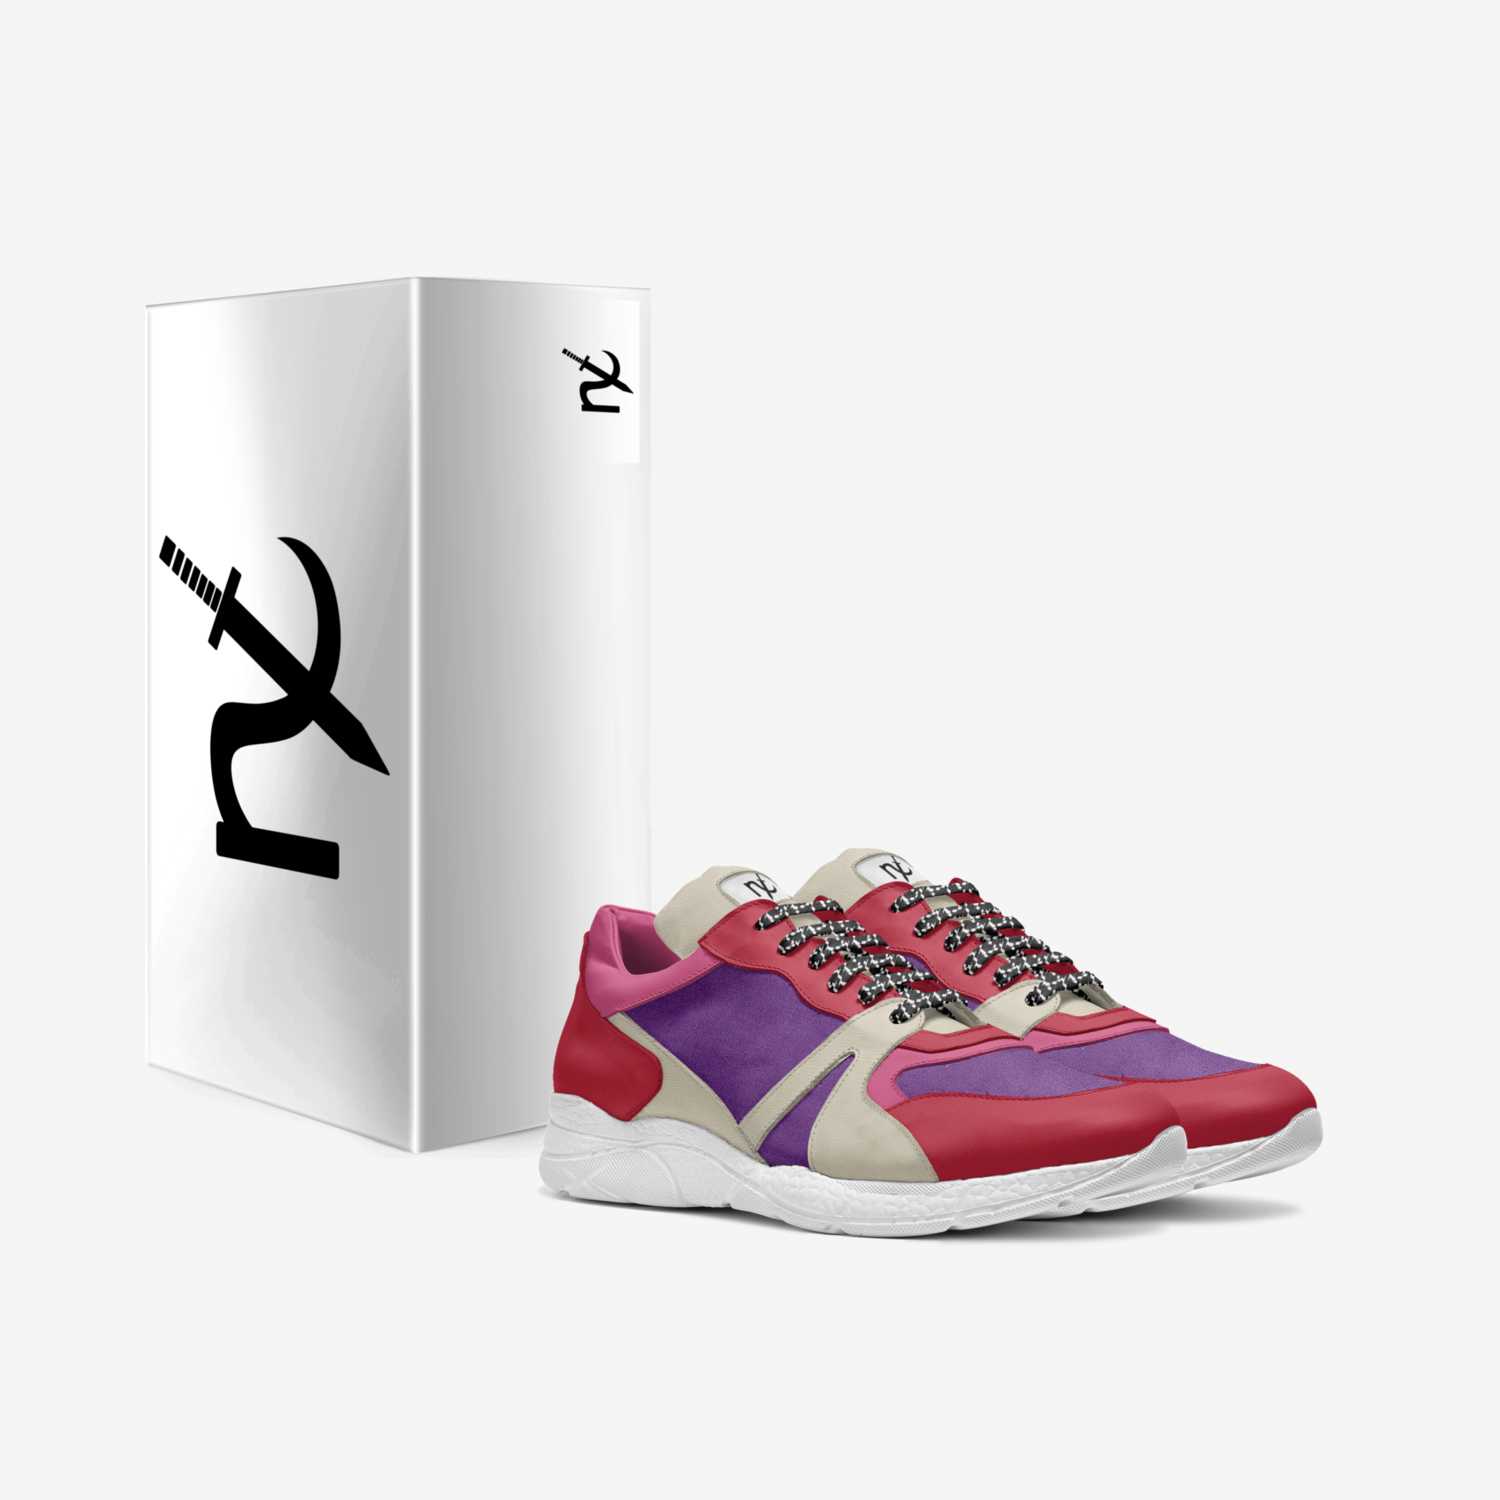 NEX STEPS custom made in Italy shoes by Jonon Blair | Box view